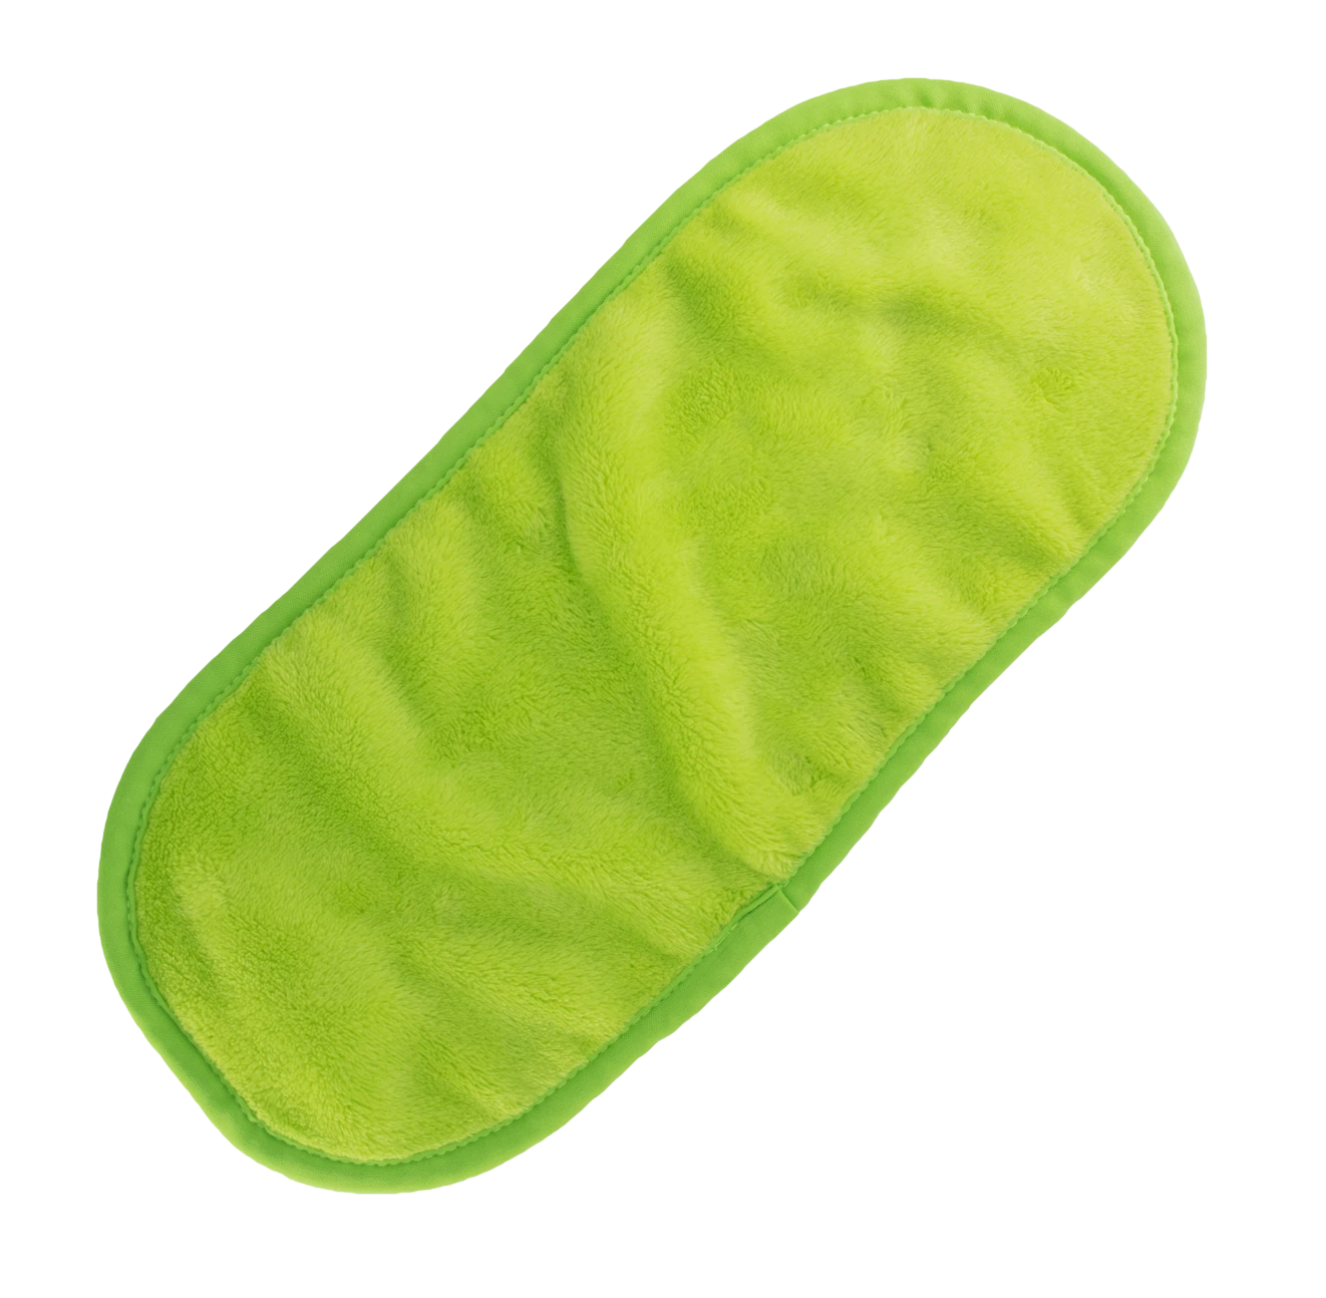 MakeUp Eraser - Neon Green